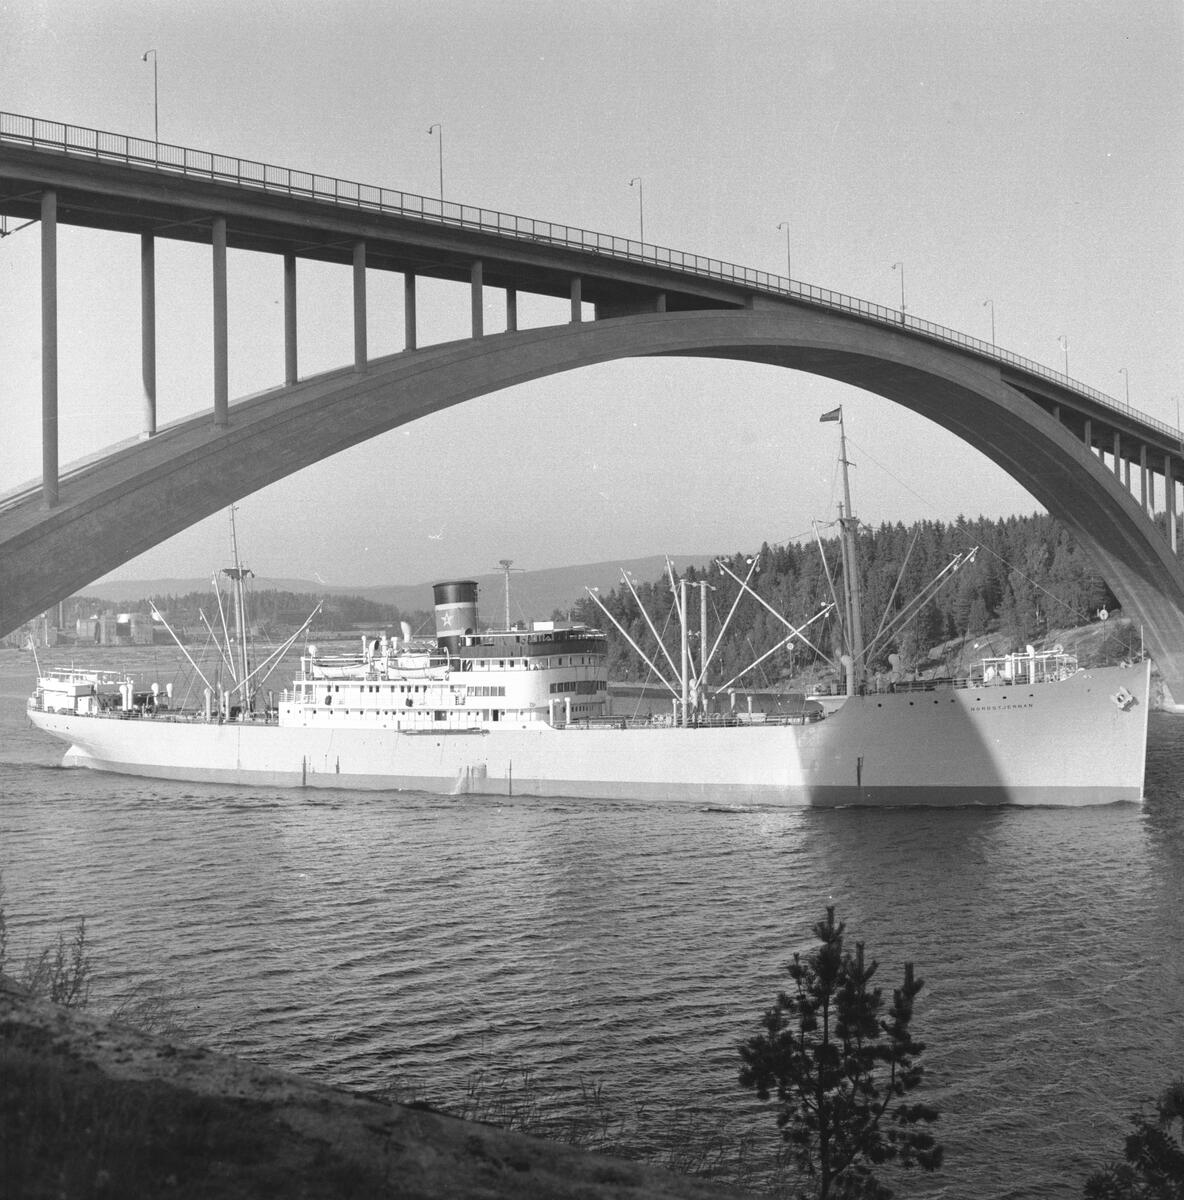 Fartyget Nordstjernan vid Sandöbron

